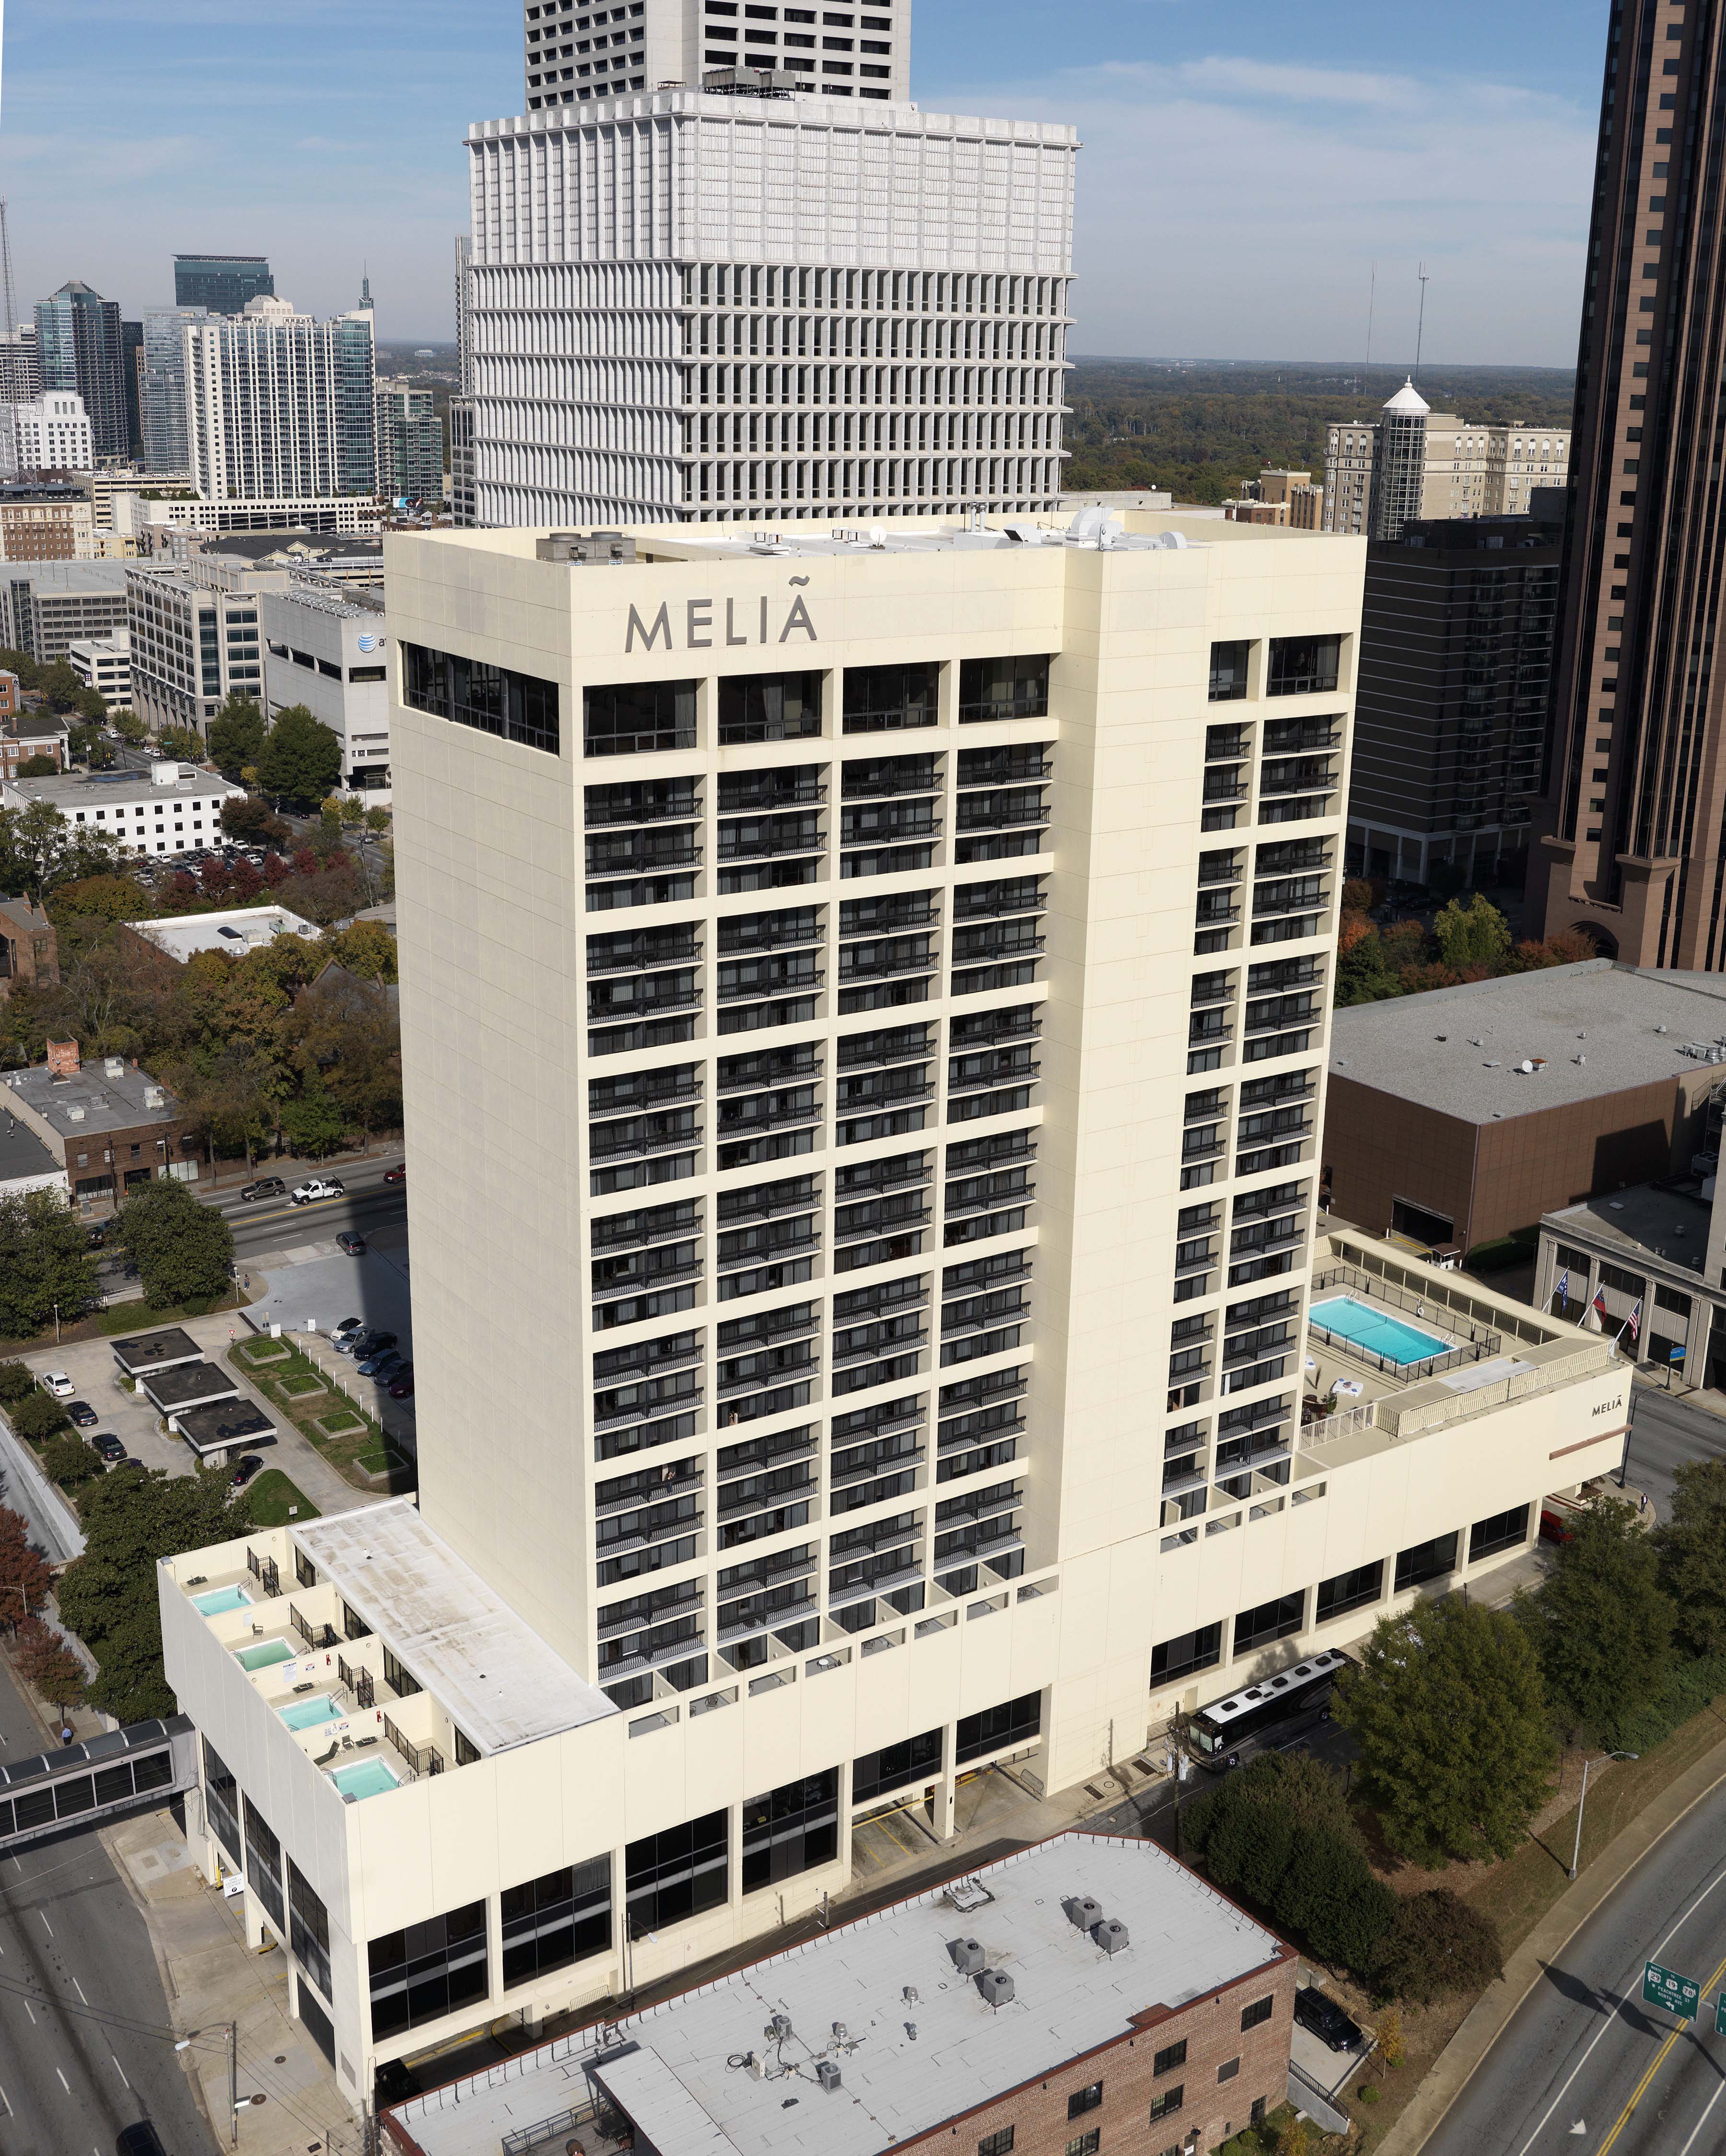 Melia Hotel Atlanta is located in the central location of Midtown Atlanta